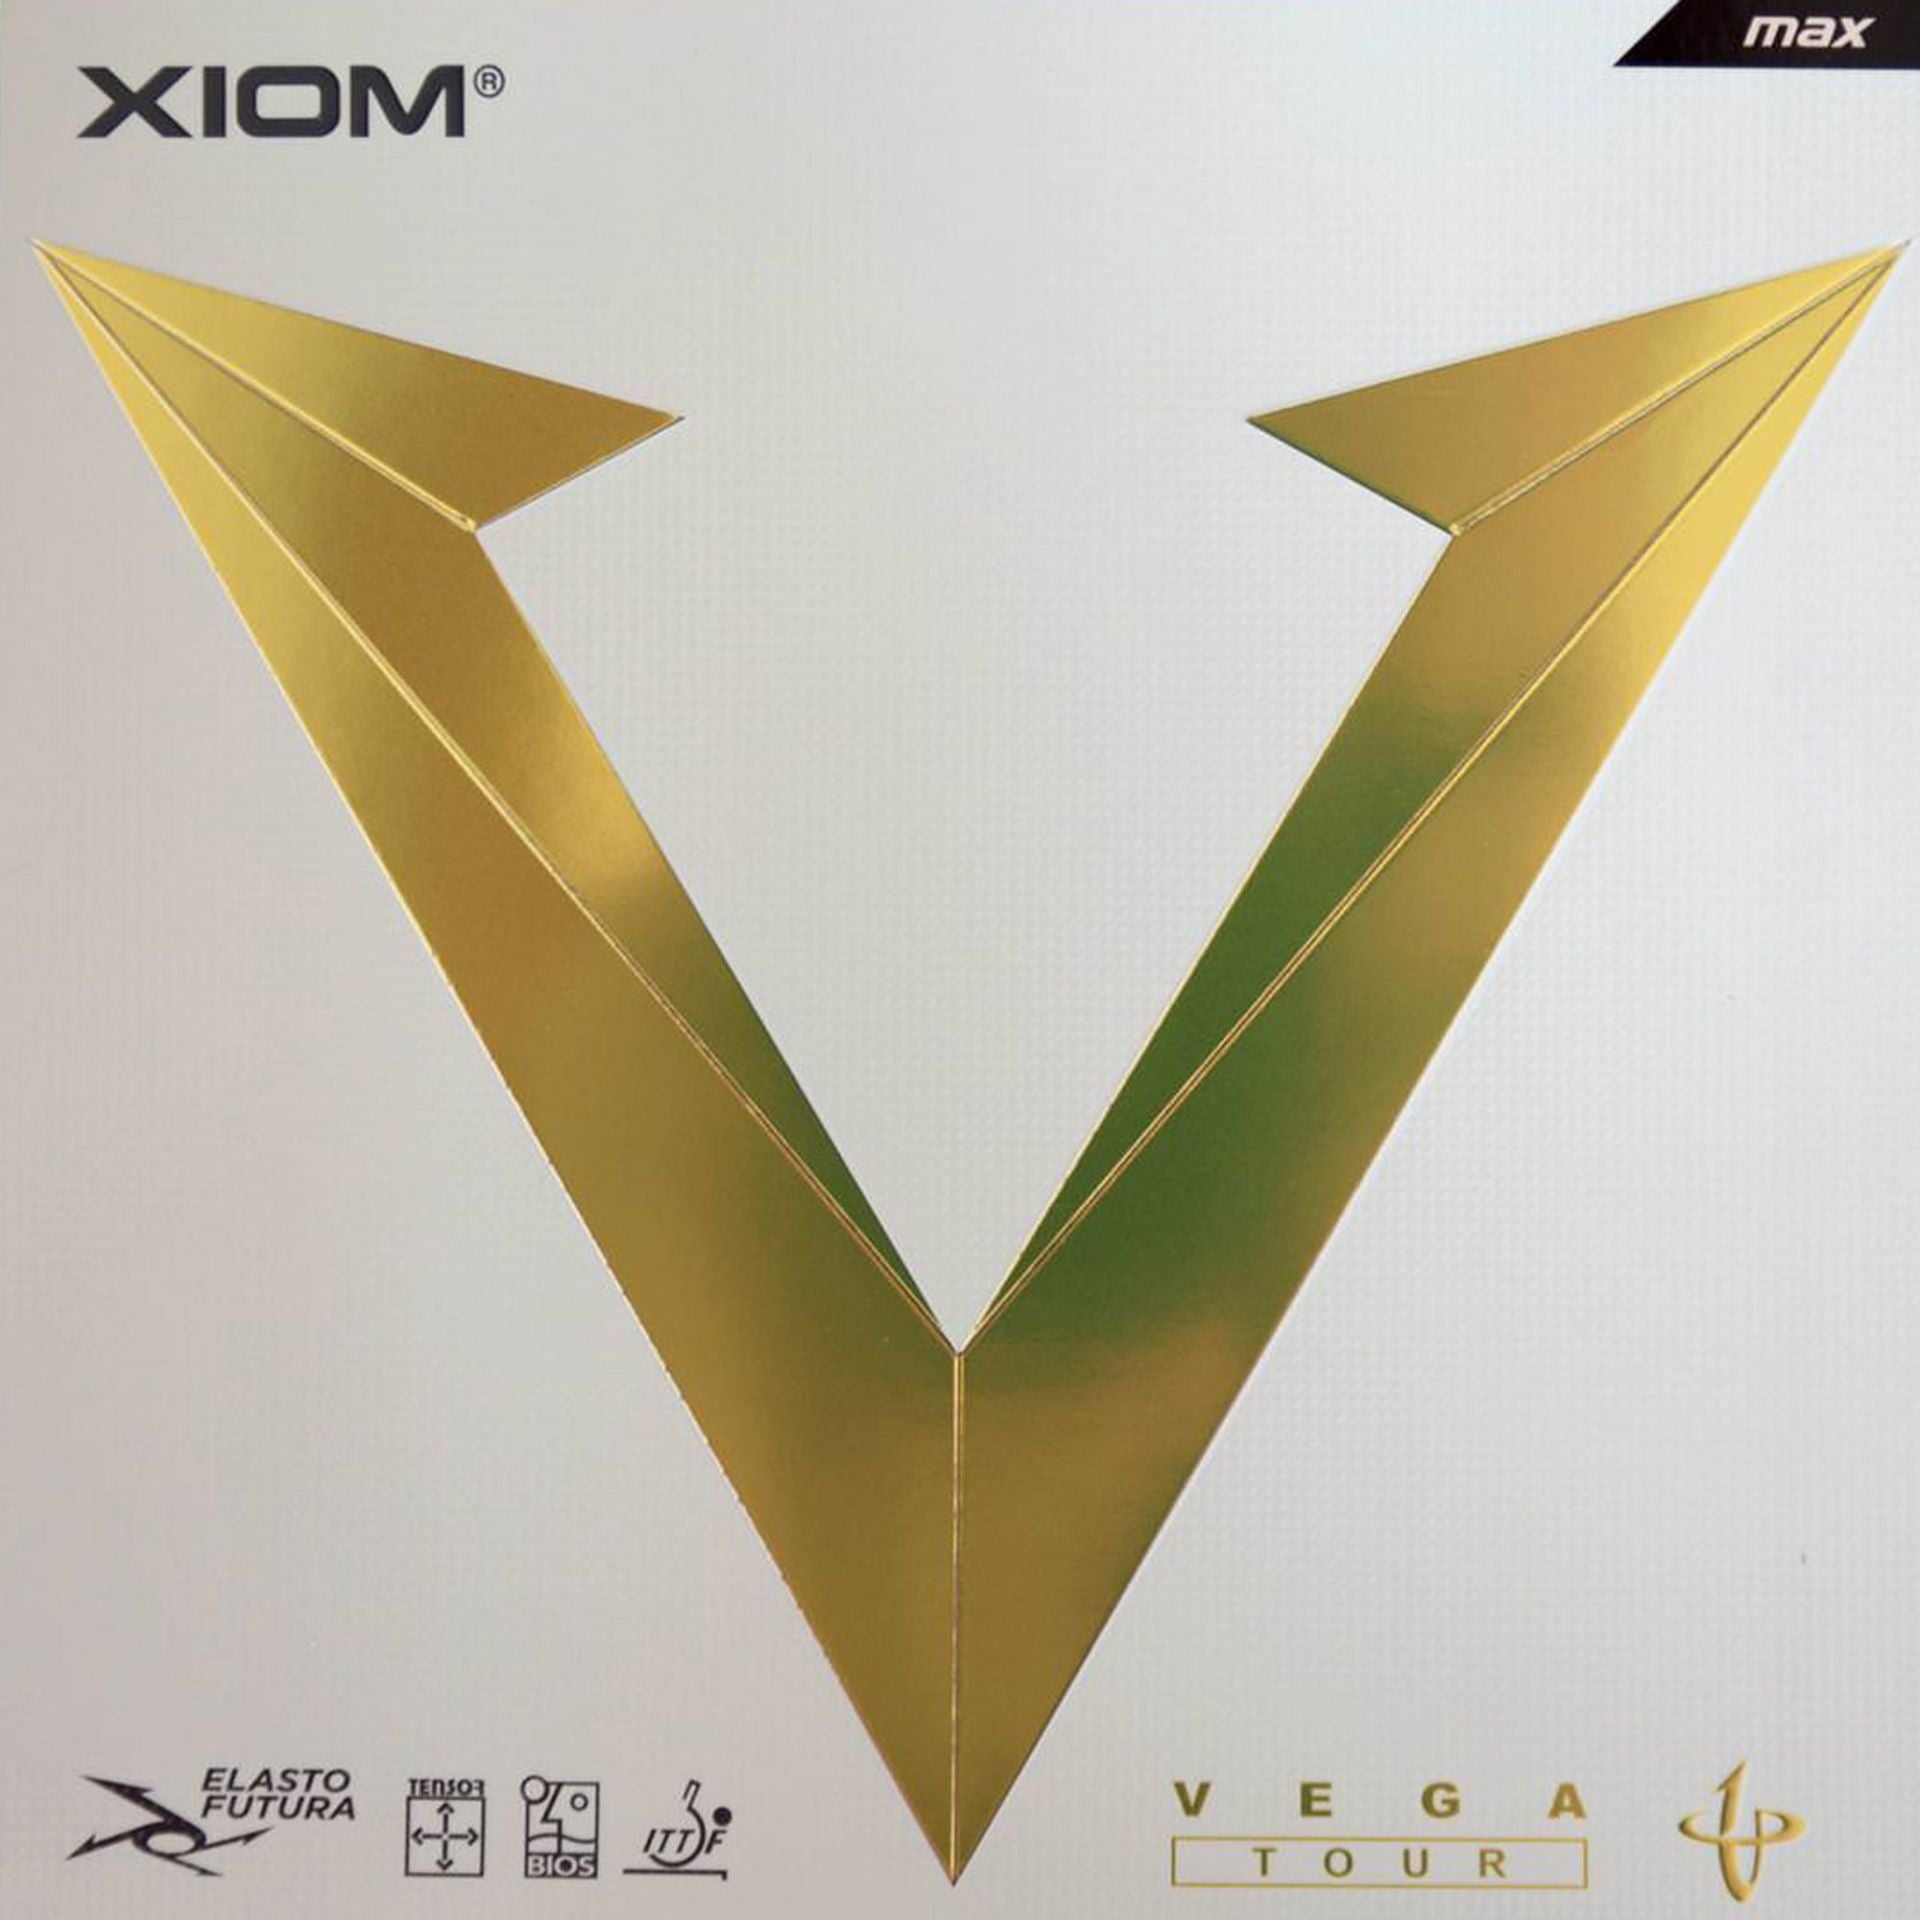 XIOM Vega Tour - Table Tennis Rubber